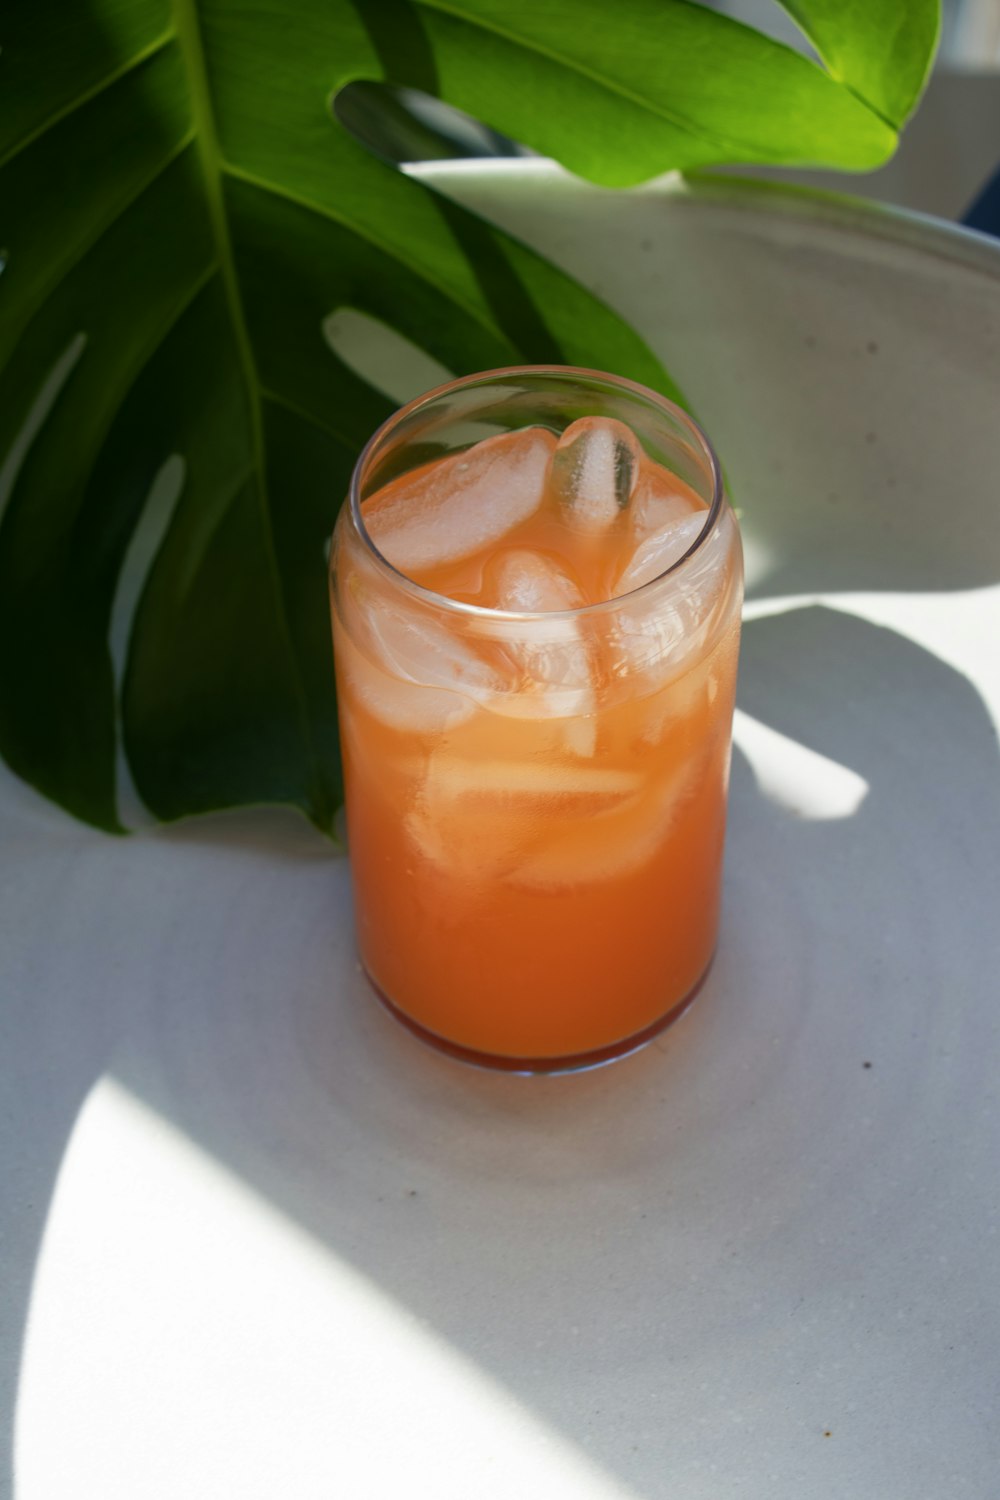 vidro transparente com líquido laranja na placa redonda branca